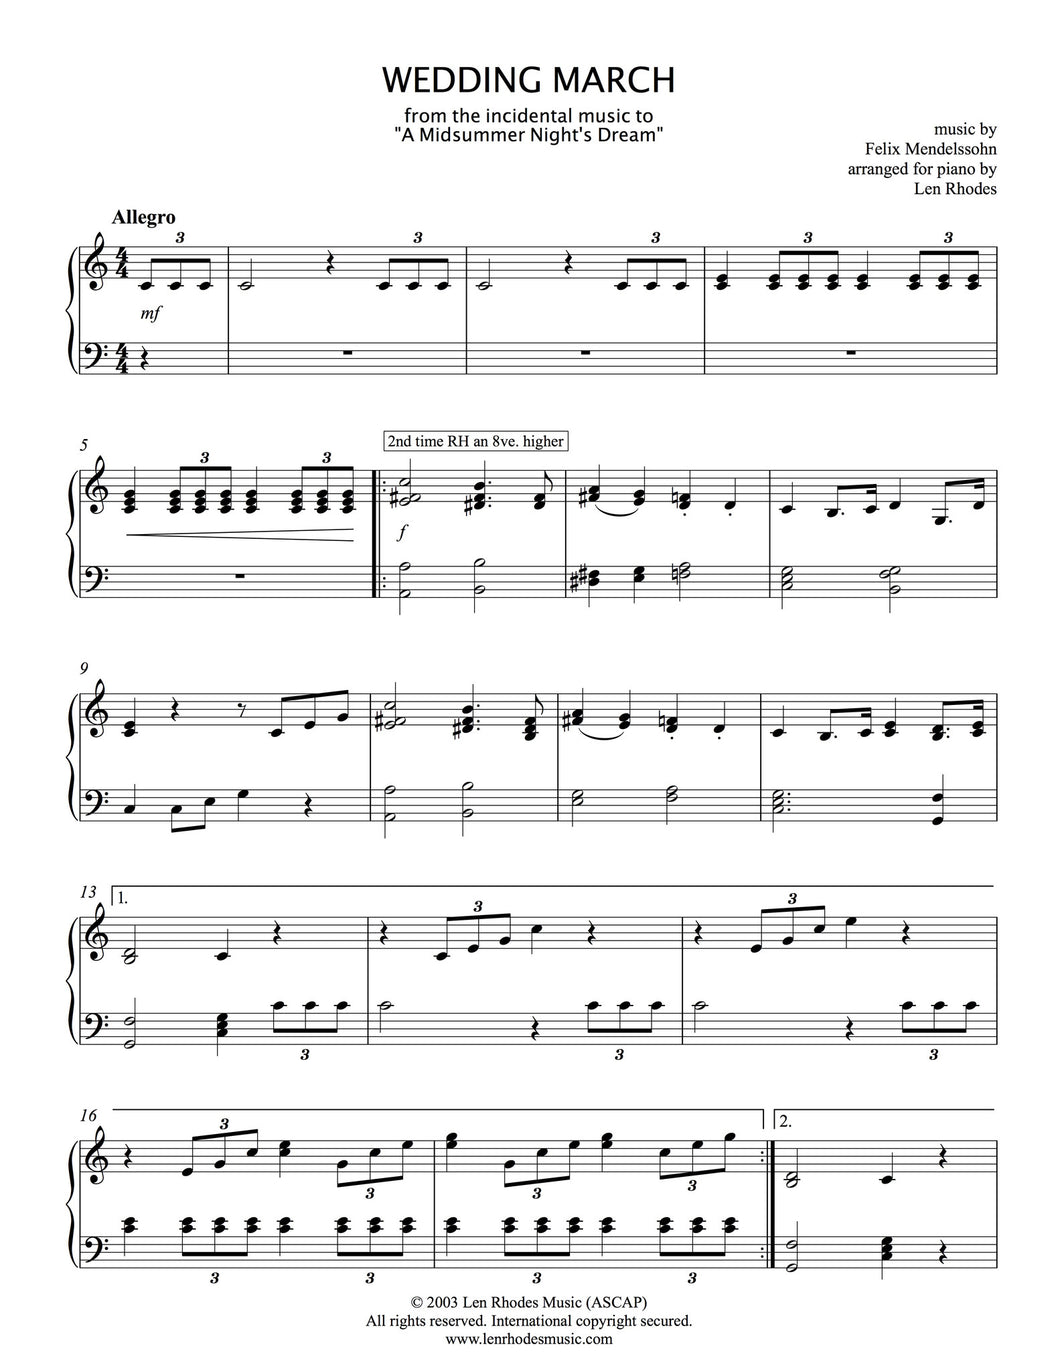 Wedding March, Mendelssohn - Piano or Organ